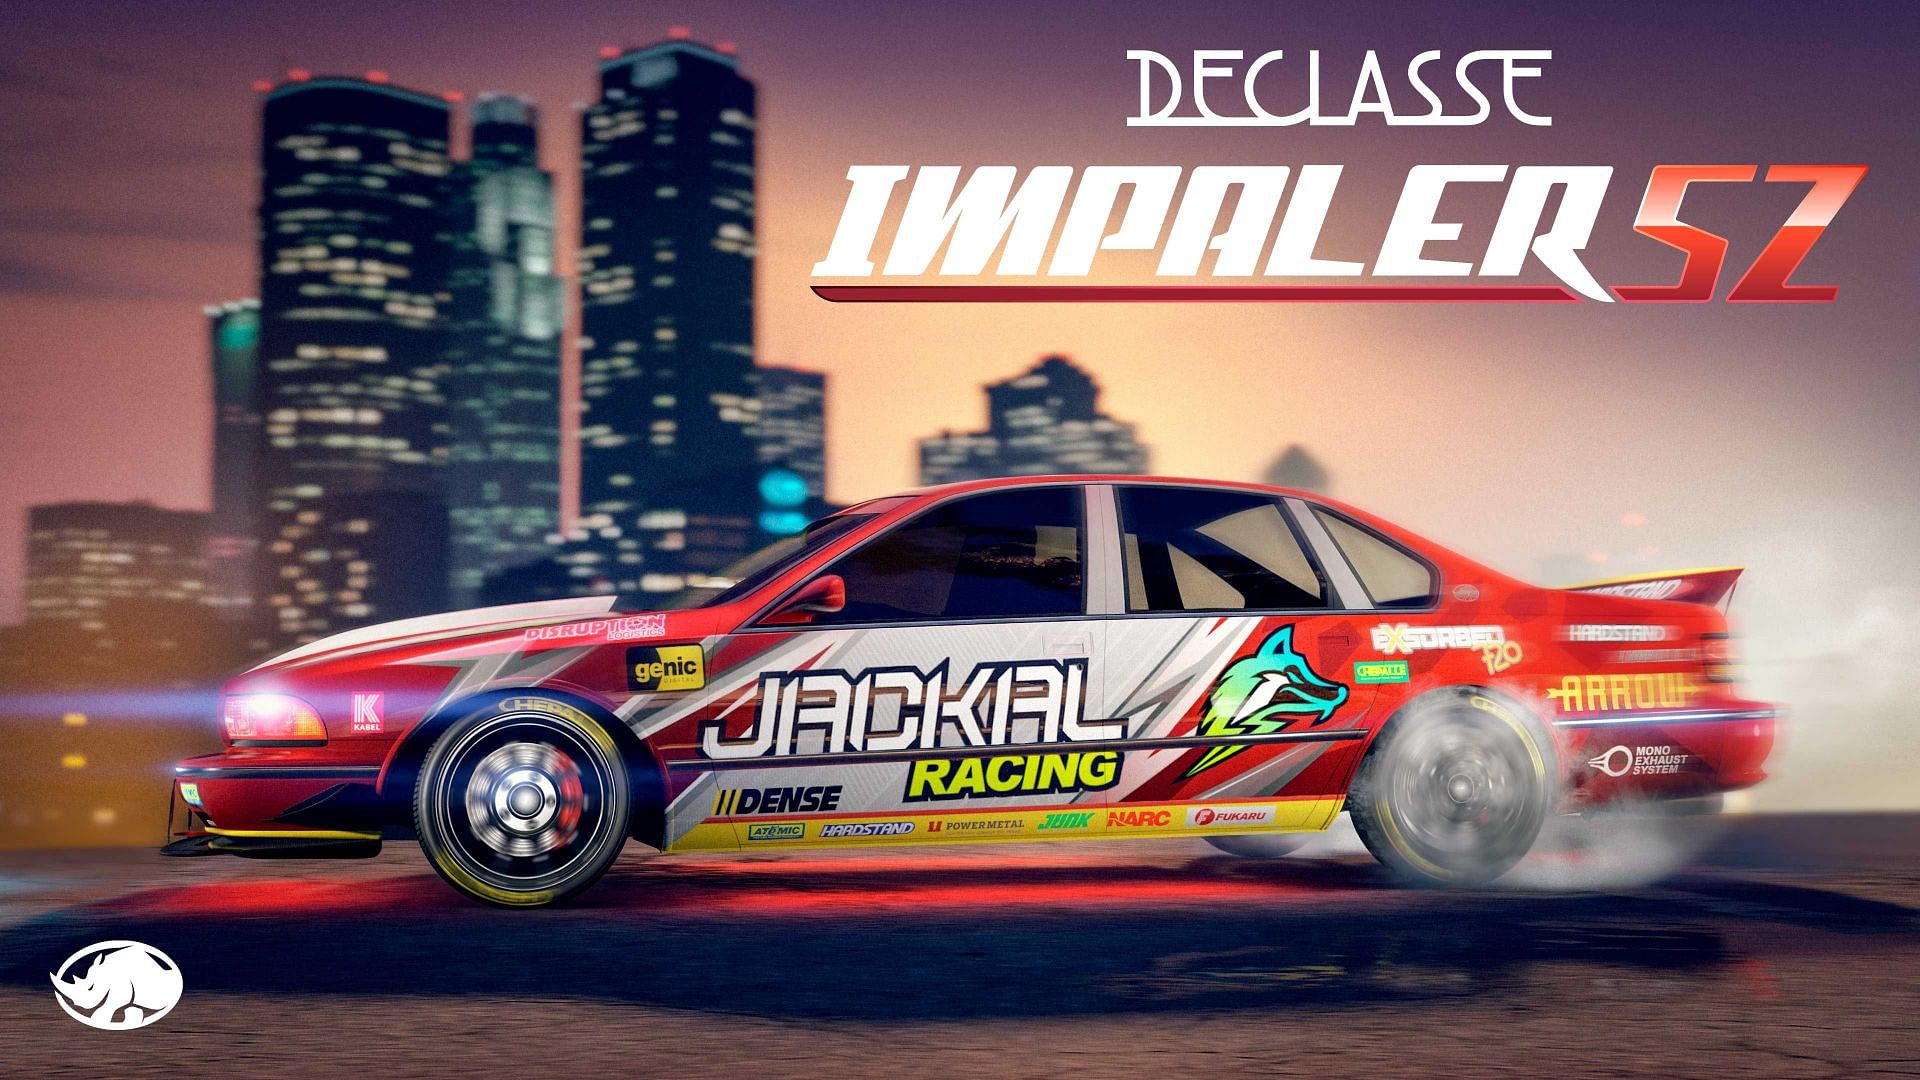 Official Declasse Impaler SZ poster (Image via Rockstar Games)